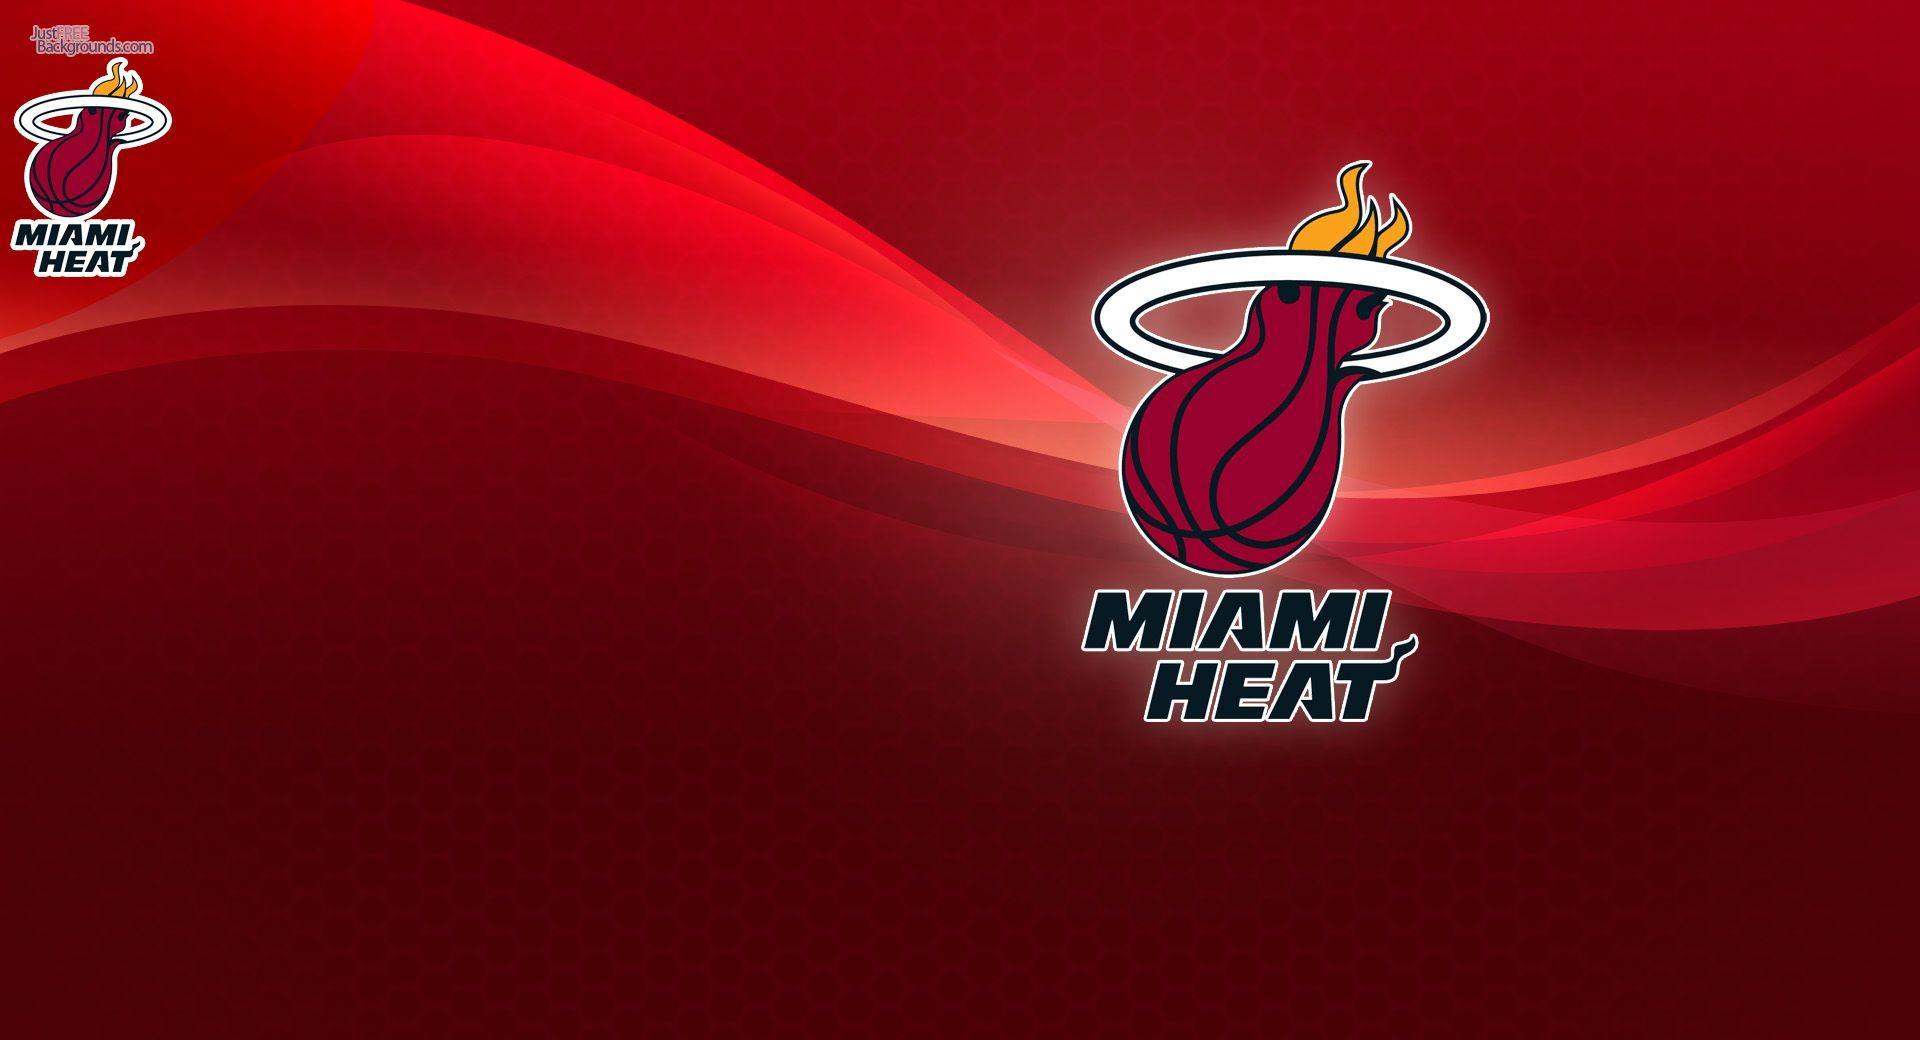 Miami Heat HD Wallpaper for Desktop and iPad